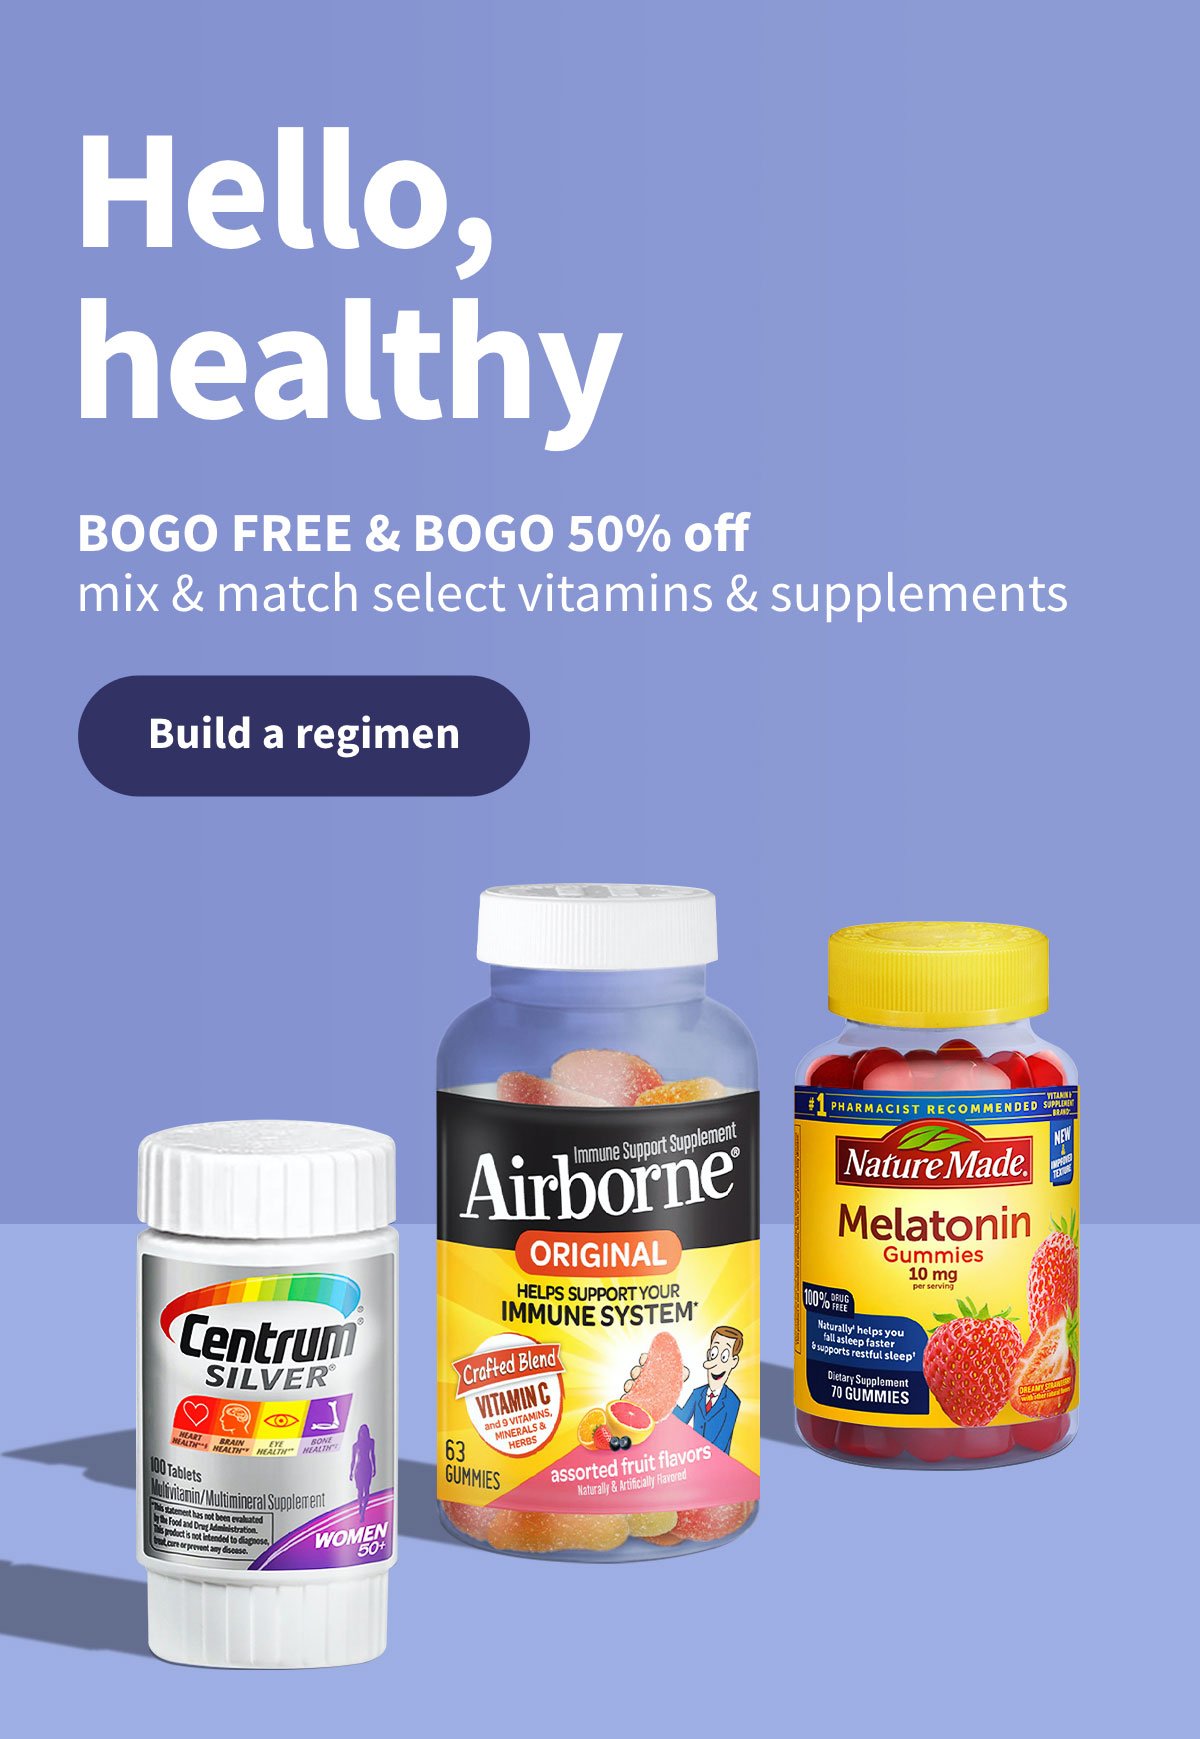 Hello, healthy. BOGO FREE & BOGO 50% off mix & match vitamins & supplements. Build a regimen.